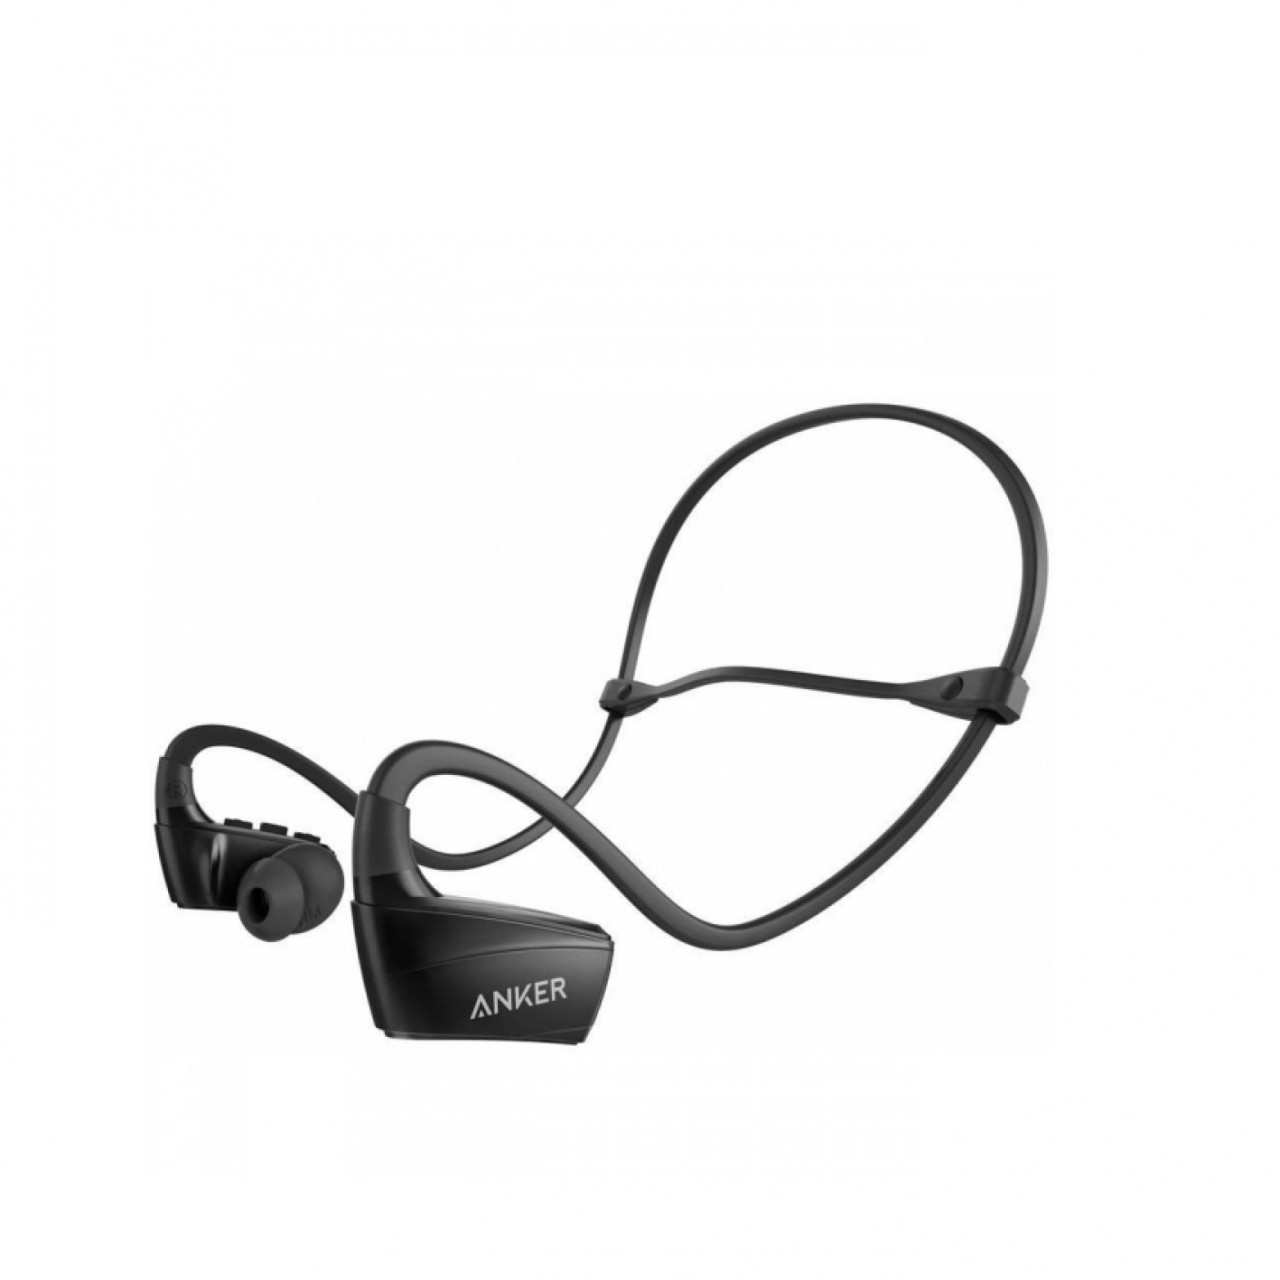 Anker A3260H11 SoundBuds NB10 Neckband Sports Headphone - 4.1 Bluetooth Technology